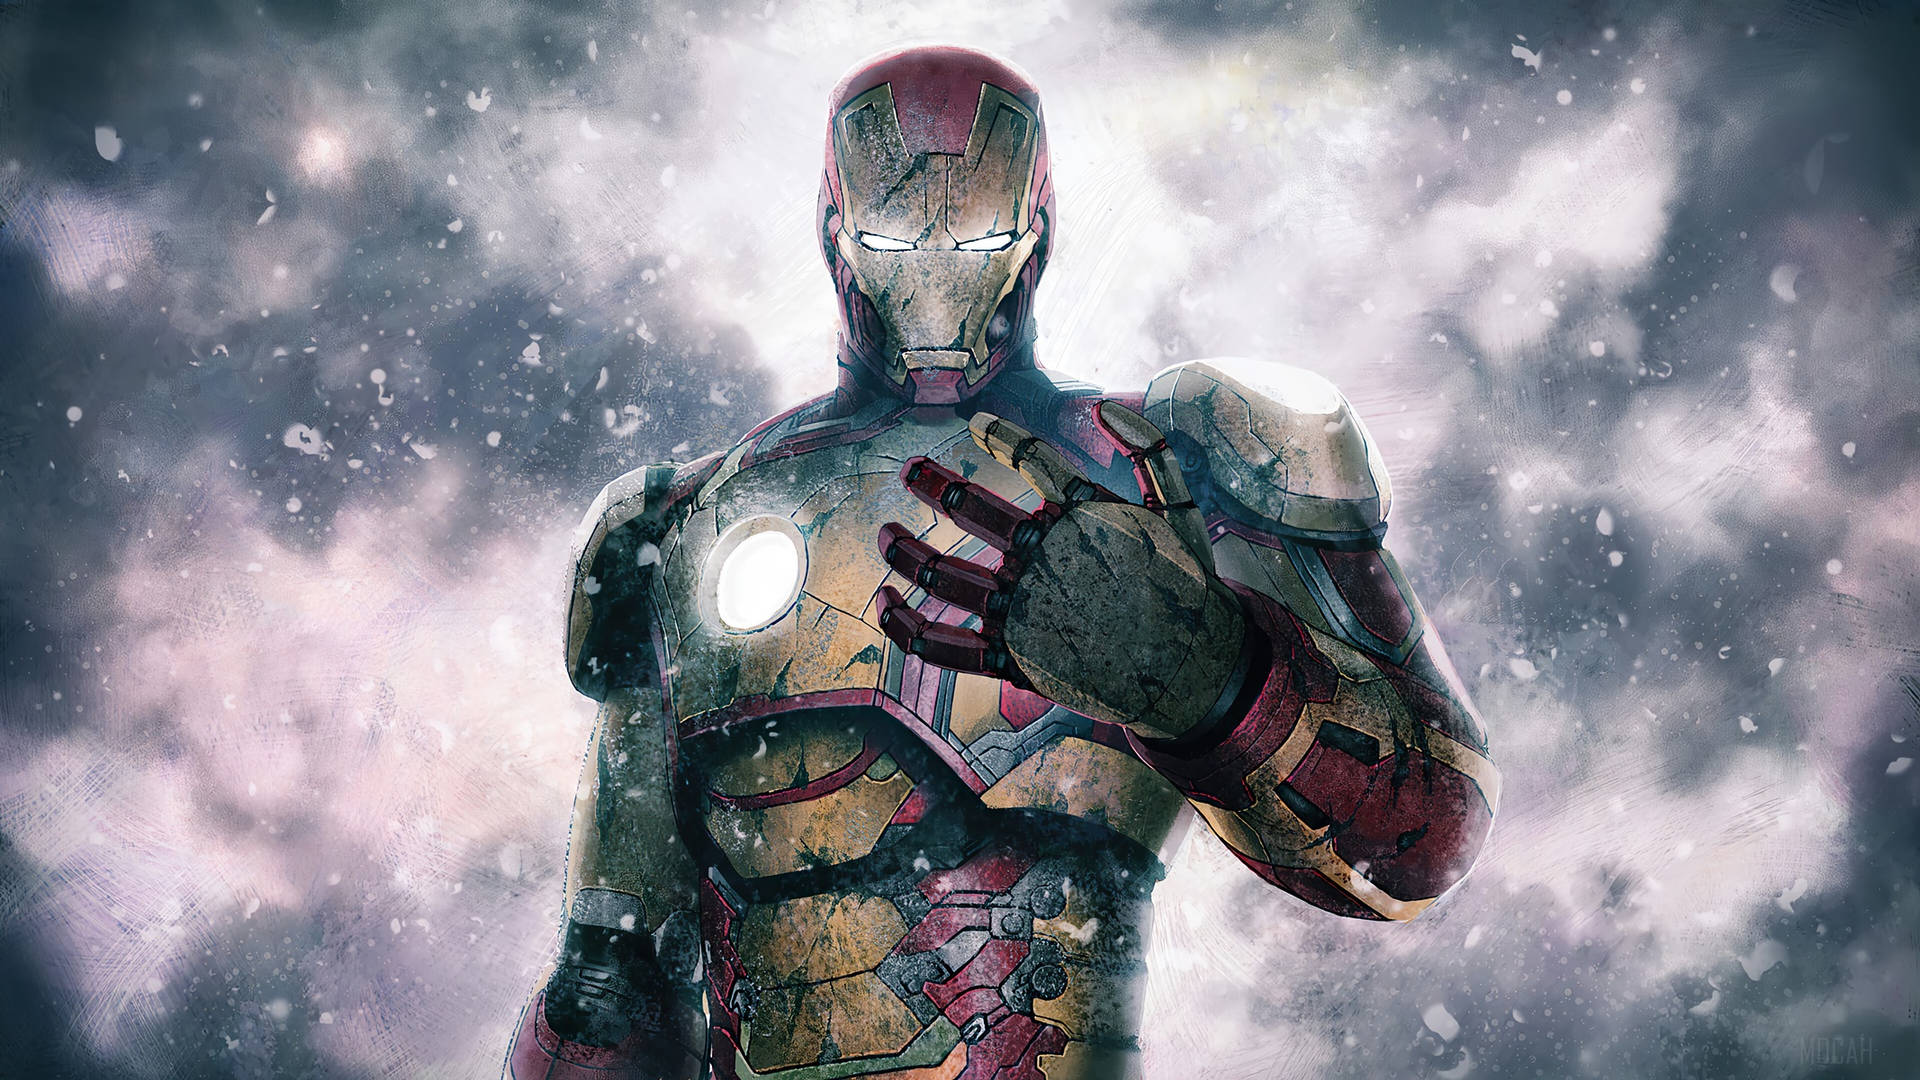 Epic and Badass Iron Man Superhero Wallpaper